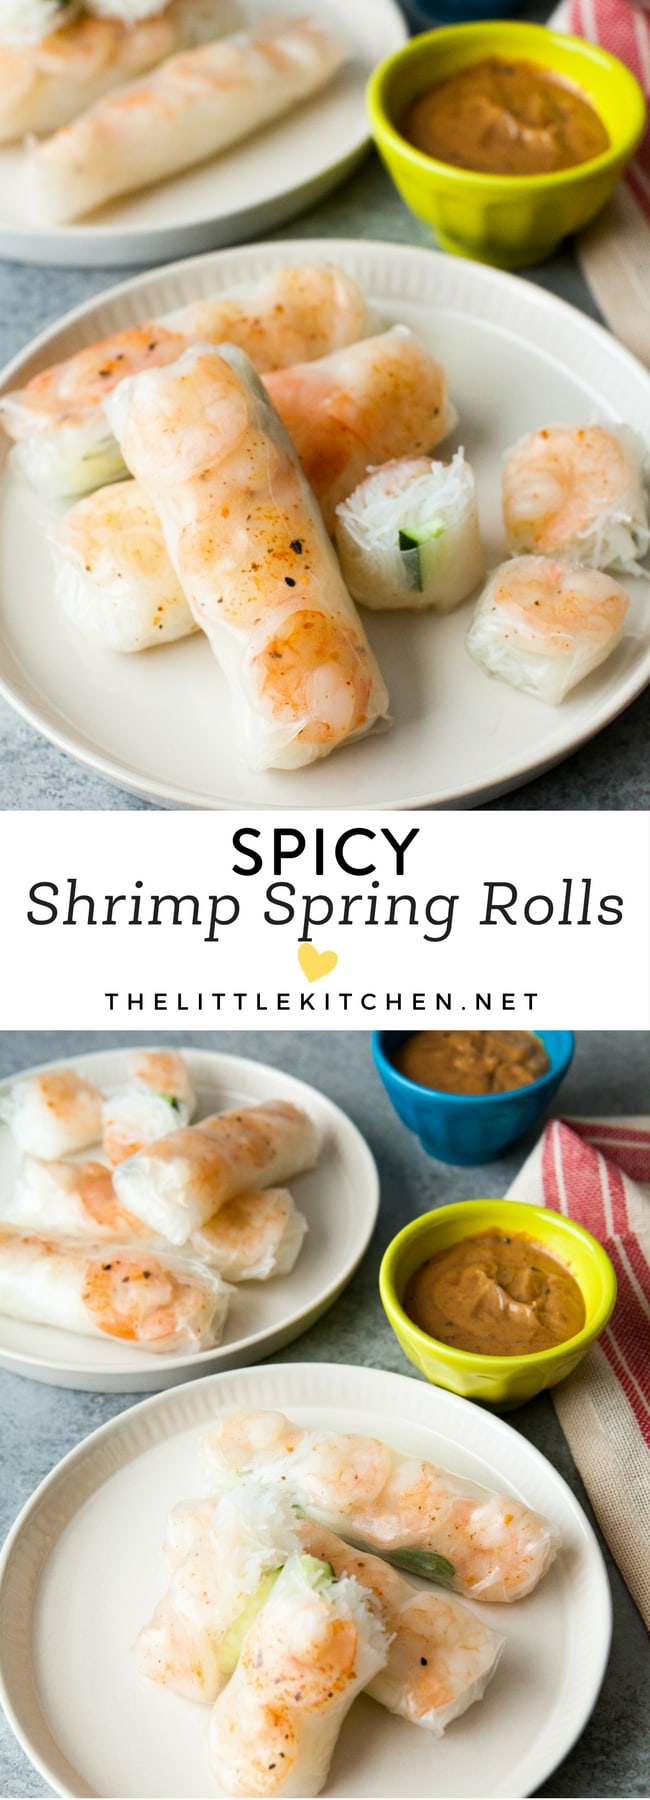 Spicy Shrimp Spring Rolls | The Little Kitchen